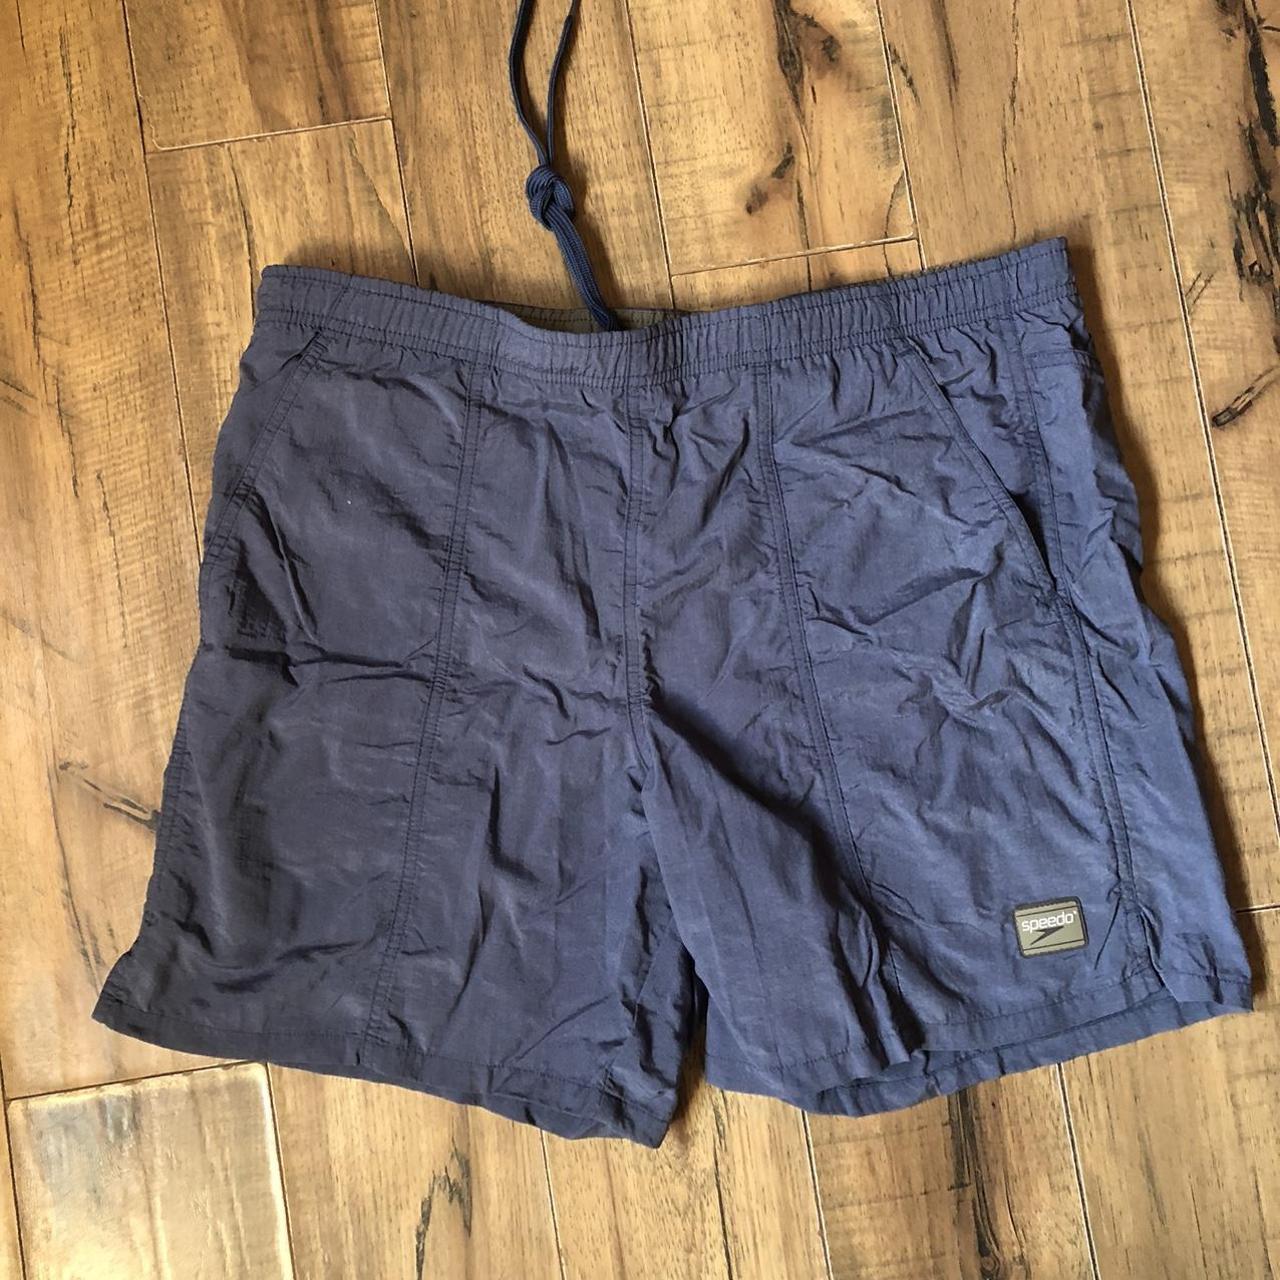 Speedo Men's Blue and Grey Shorts | Depop